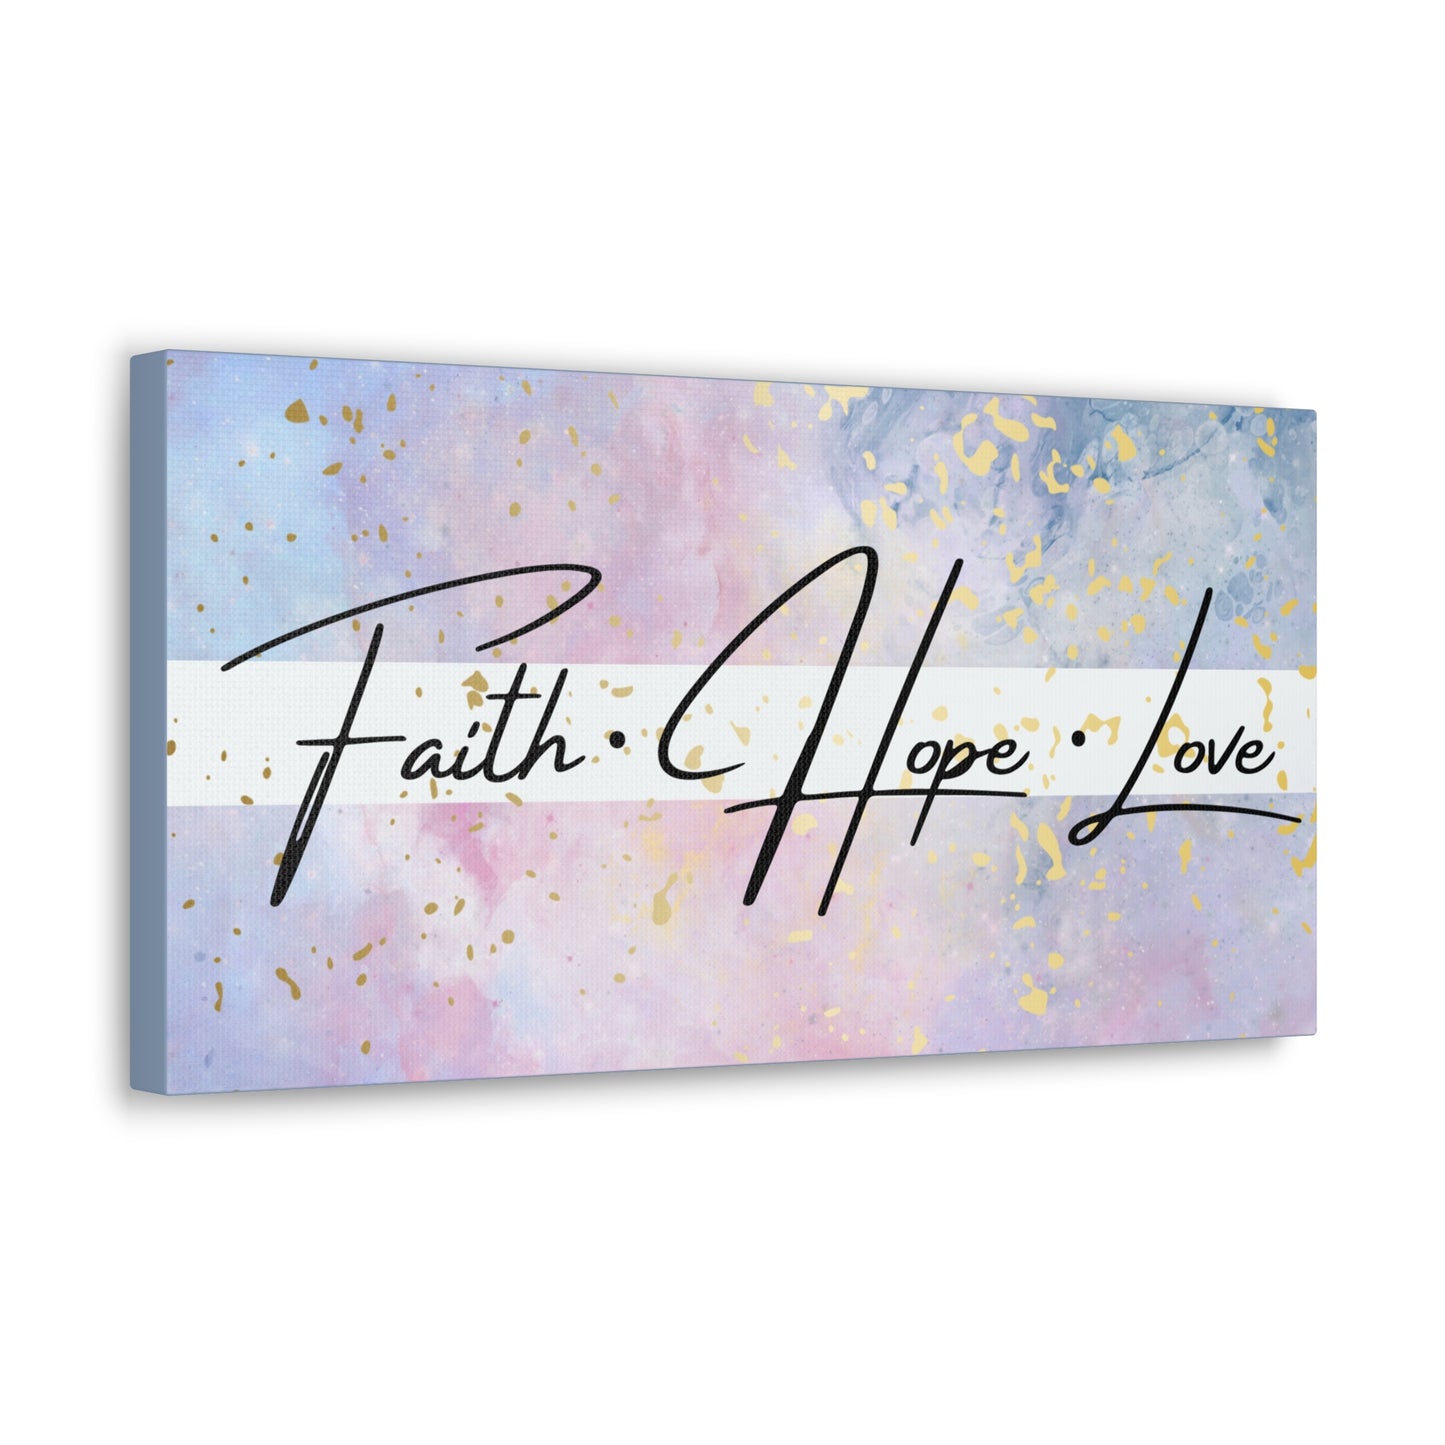 Christian Wall Art: Faith Love Hope (Wood Frame Ready to Hang)